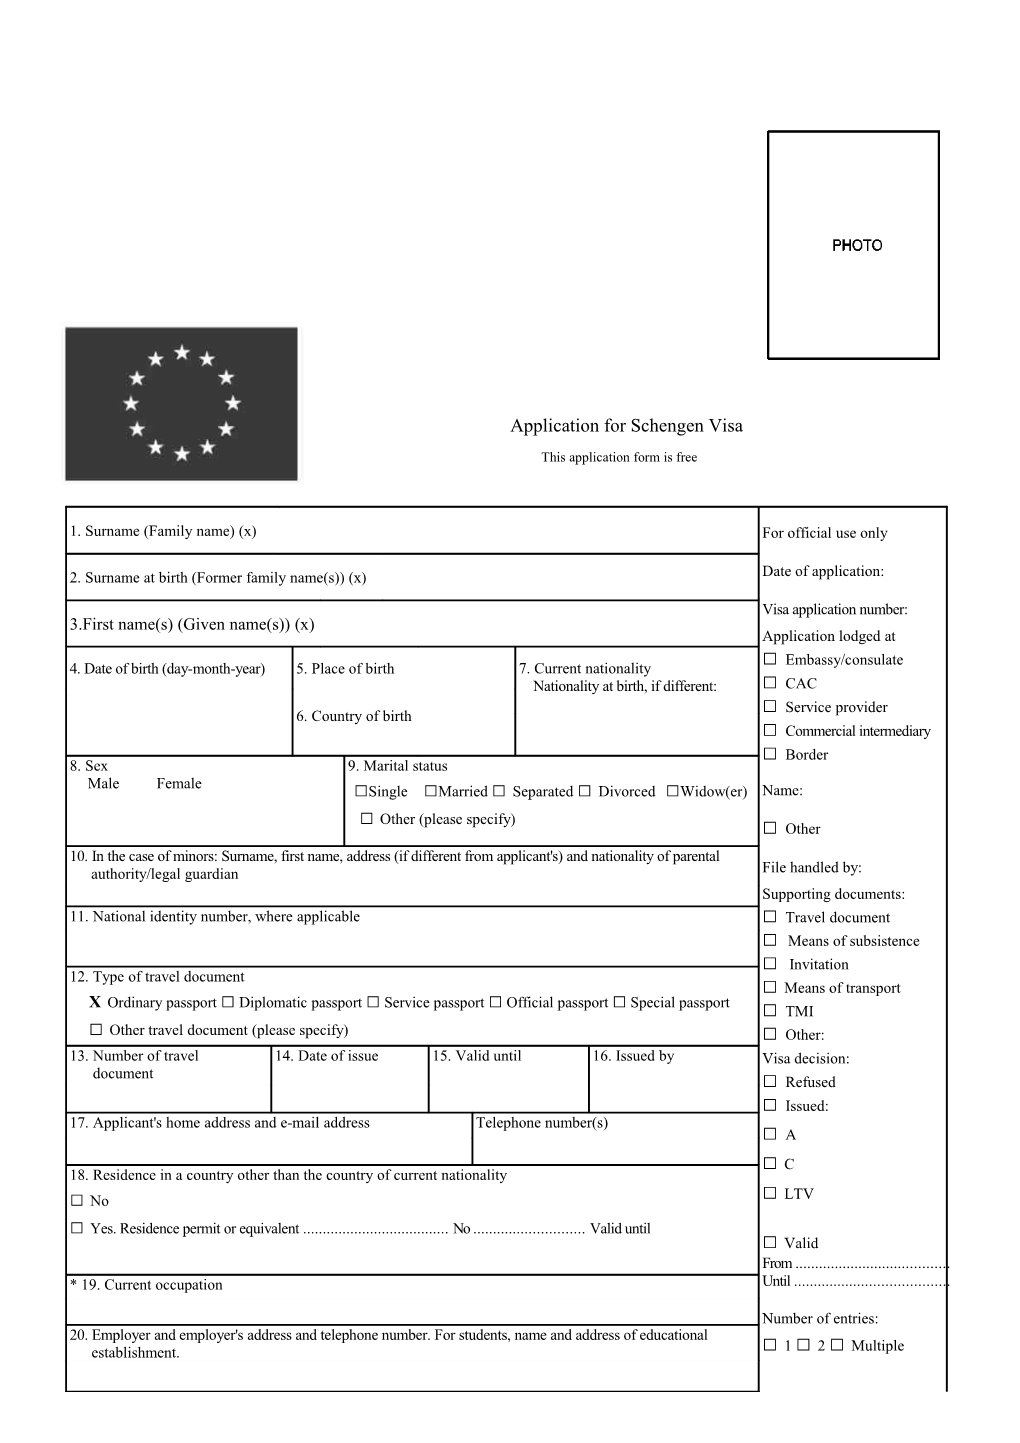 Application for Schengen Visa s2